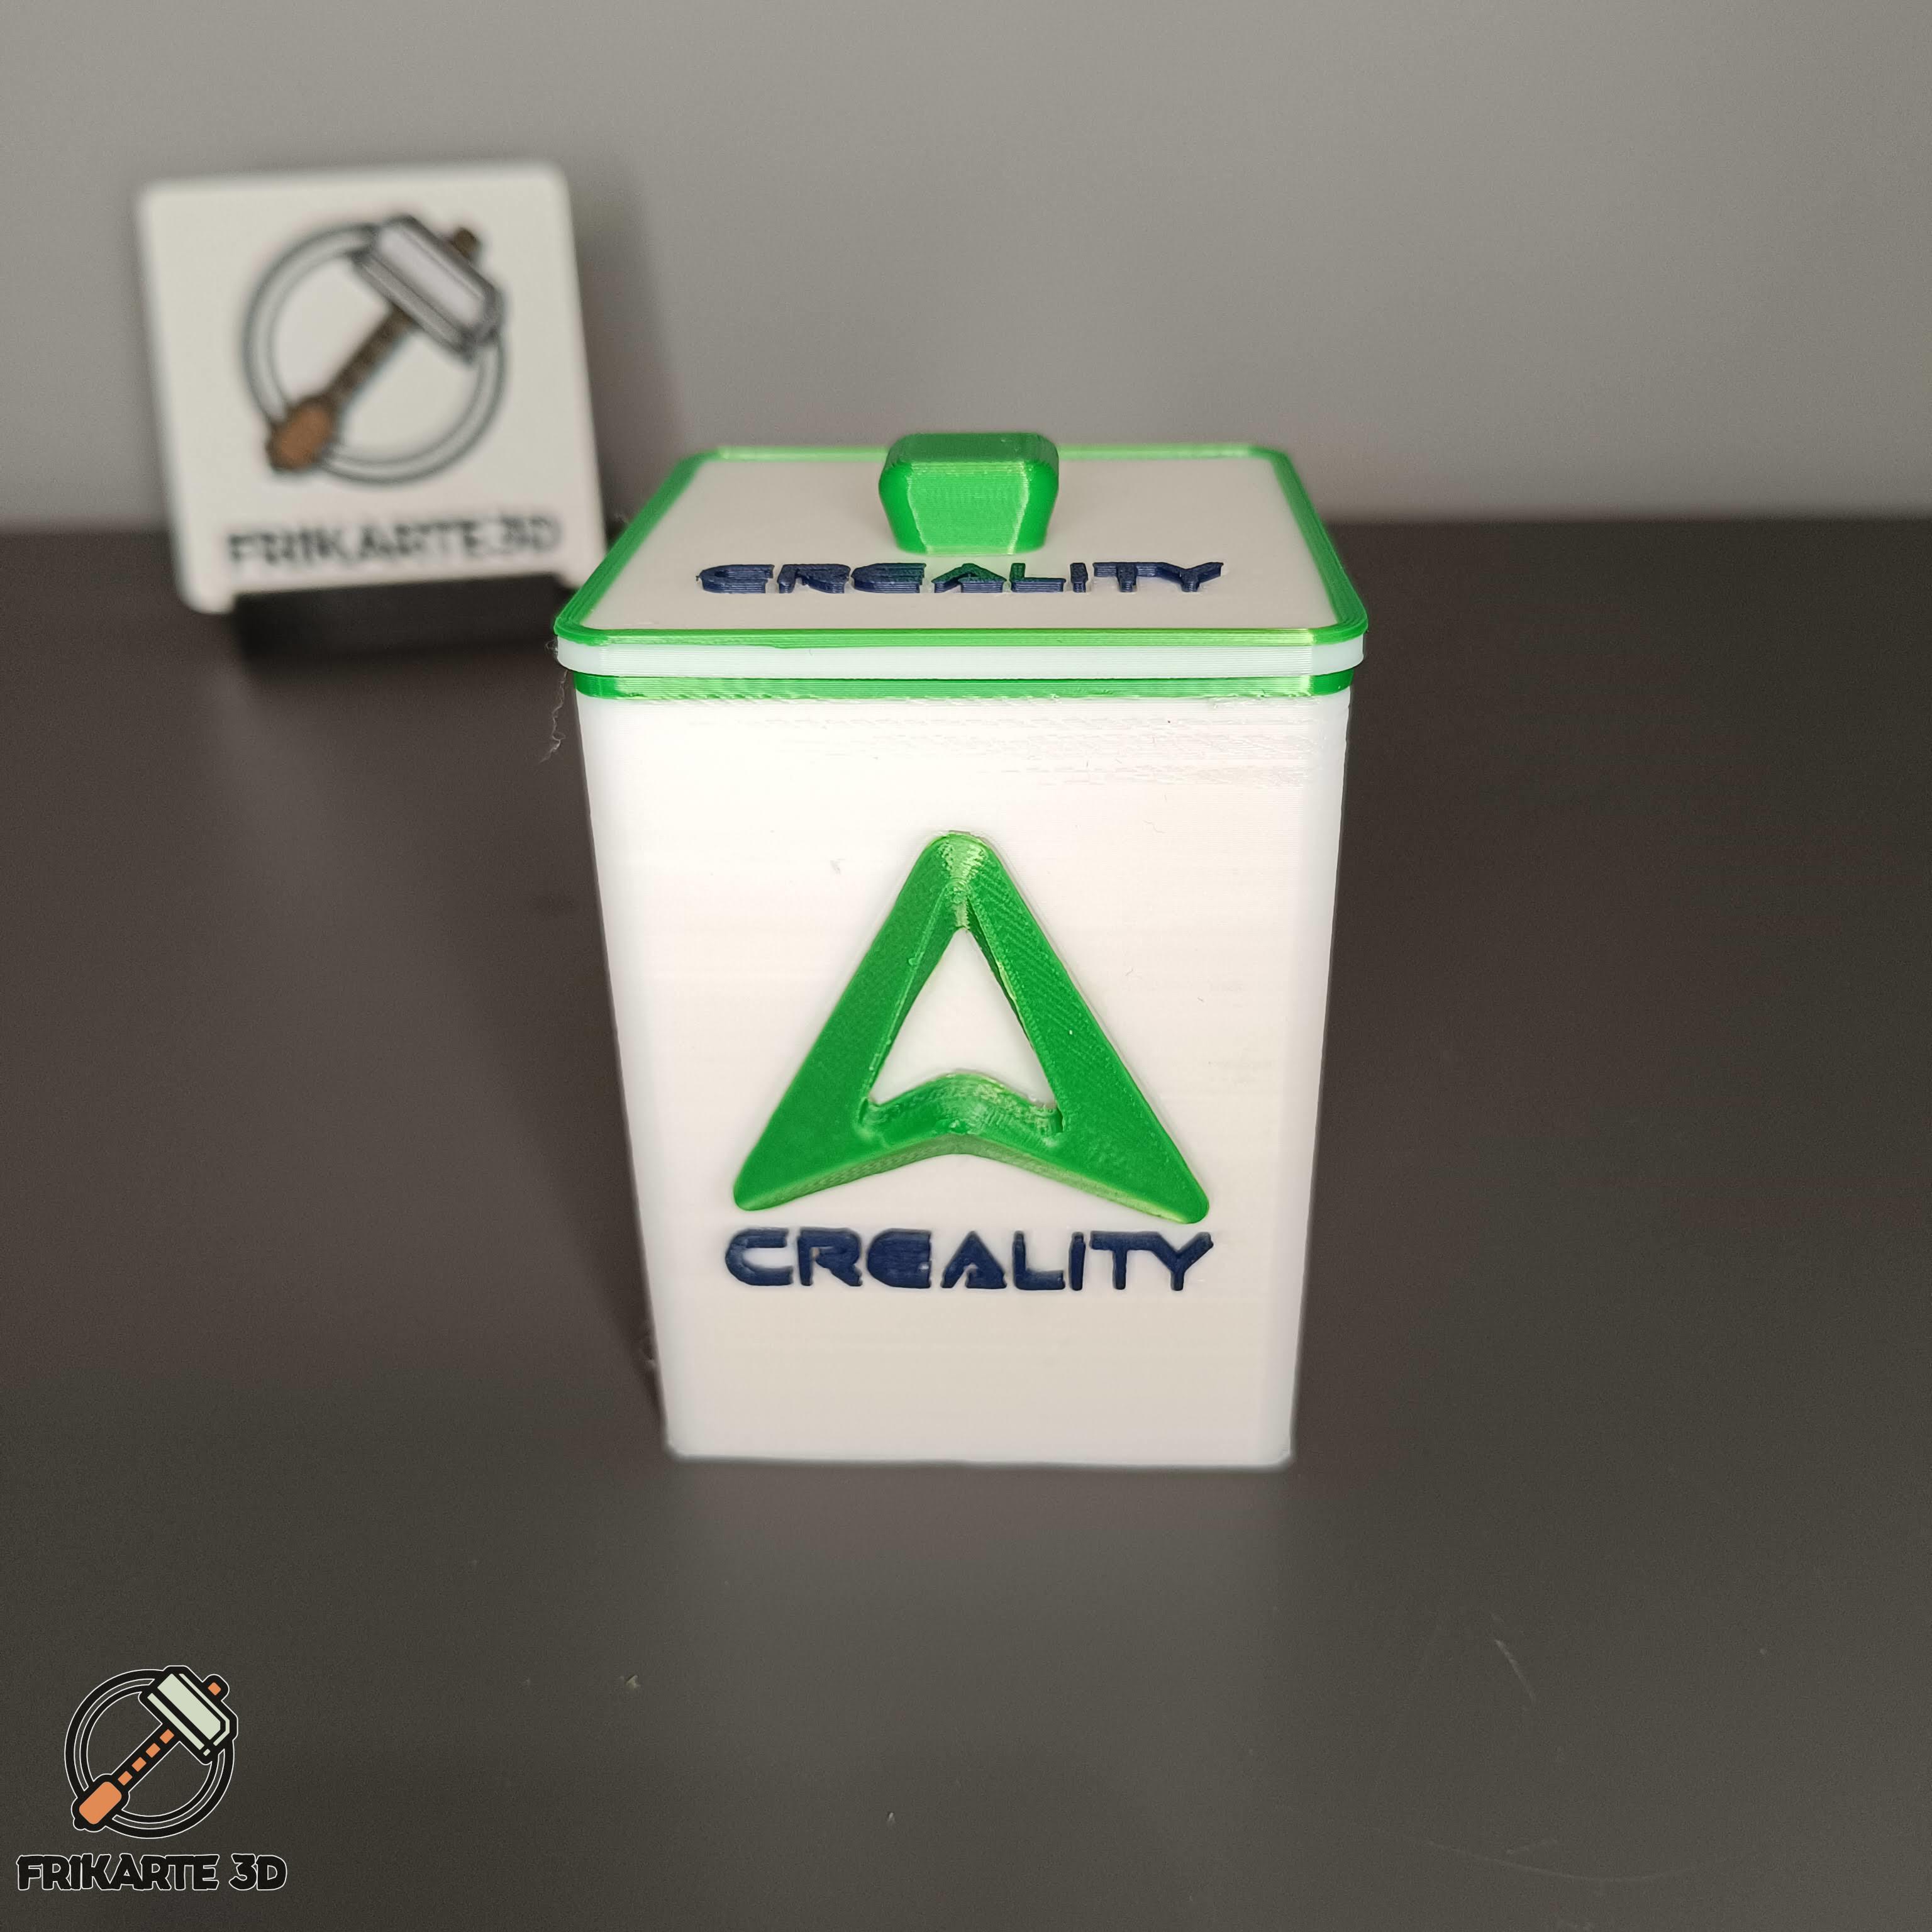 Creality Desk Holder and Box 3d model